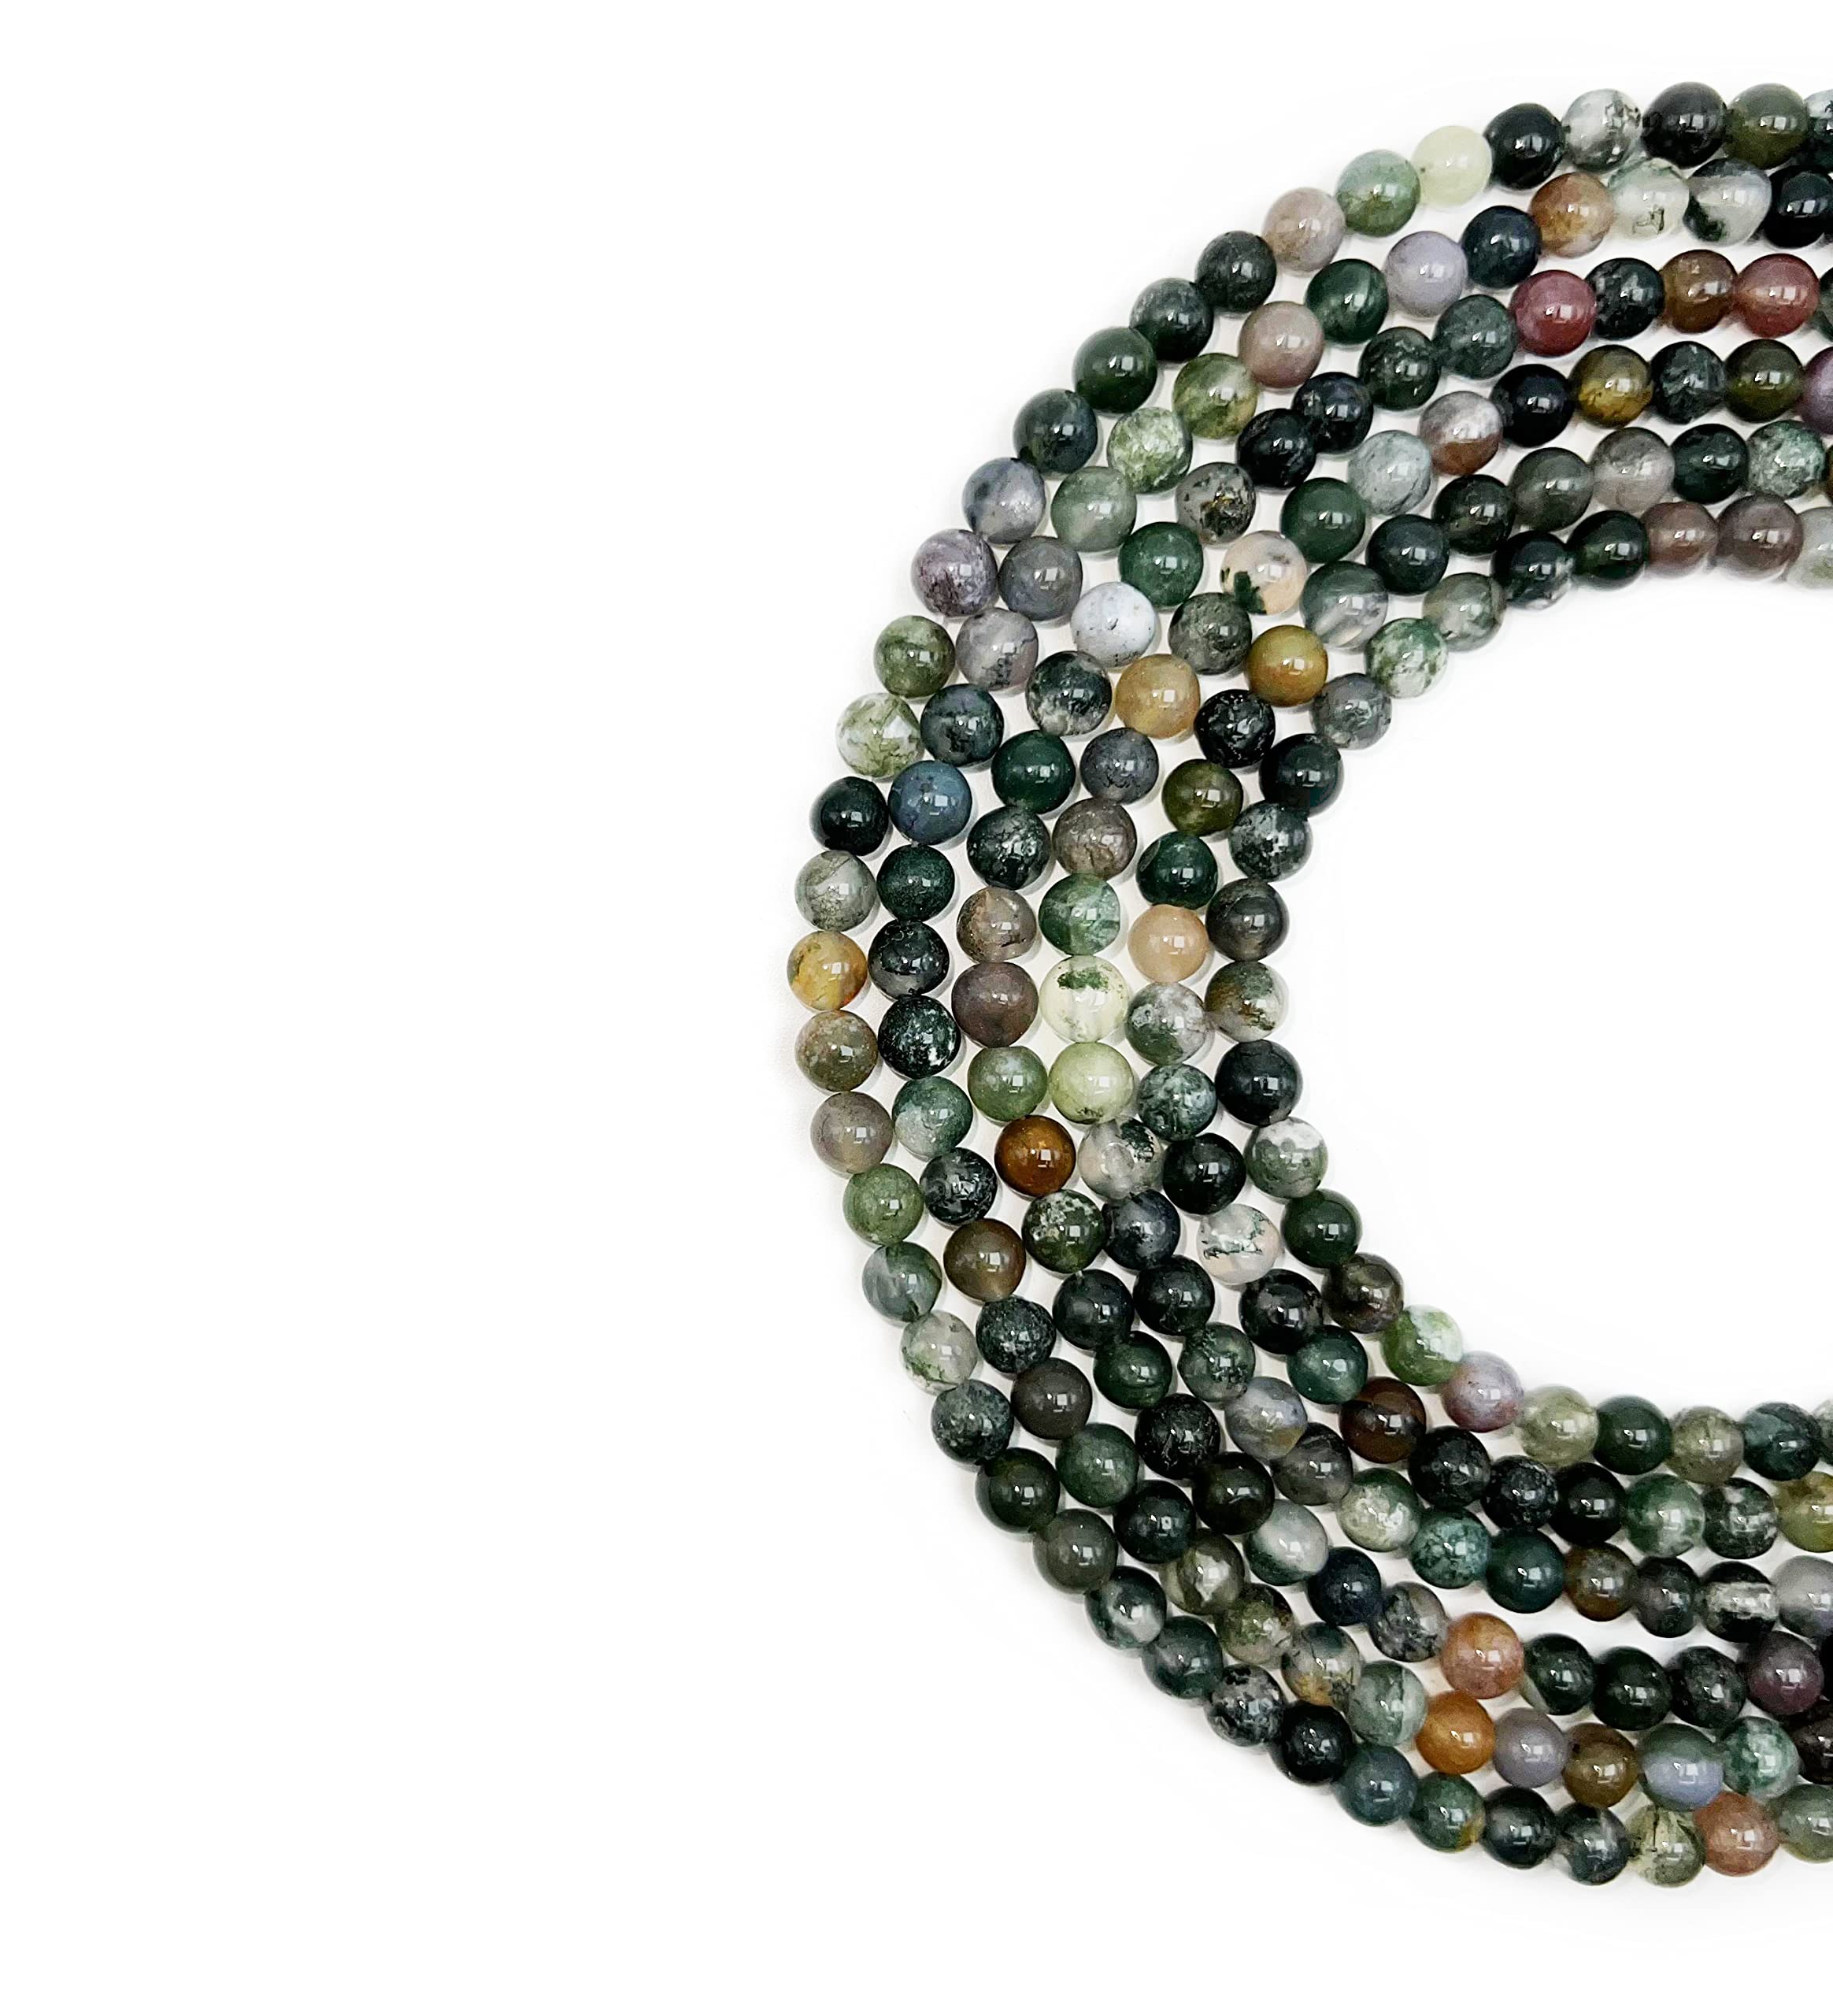 Qiwan Natural gemstone Round Loose Beads, DIY Jewelry Making 1 Strand 15 (6mm, Natural Indian Agate gemstone)